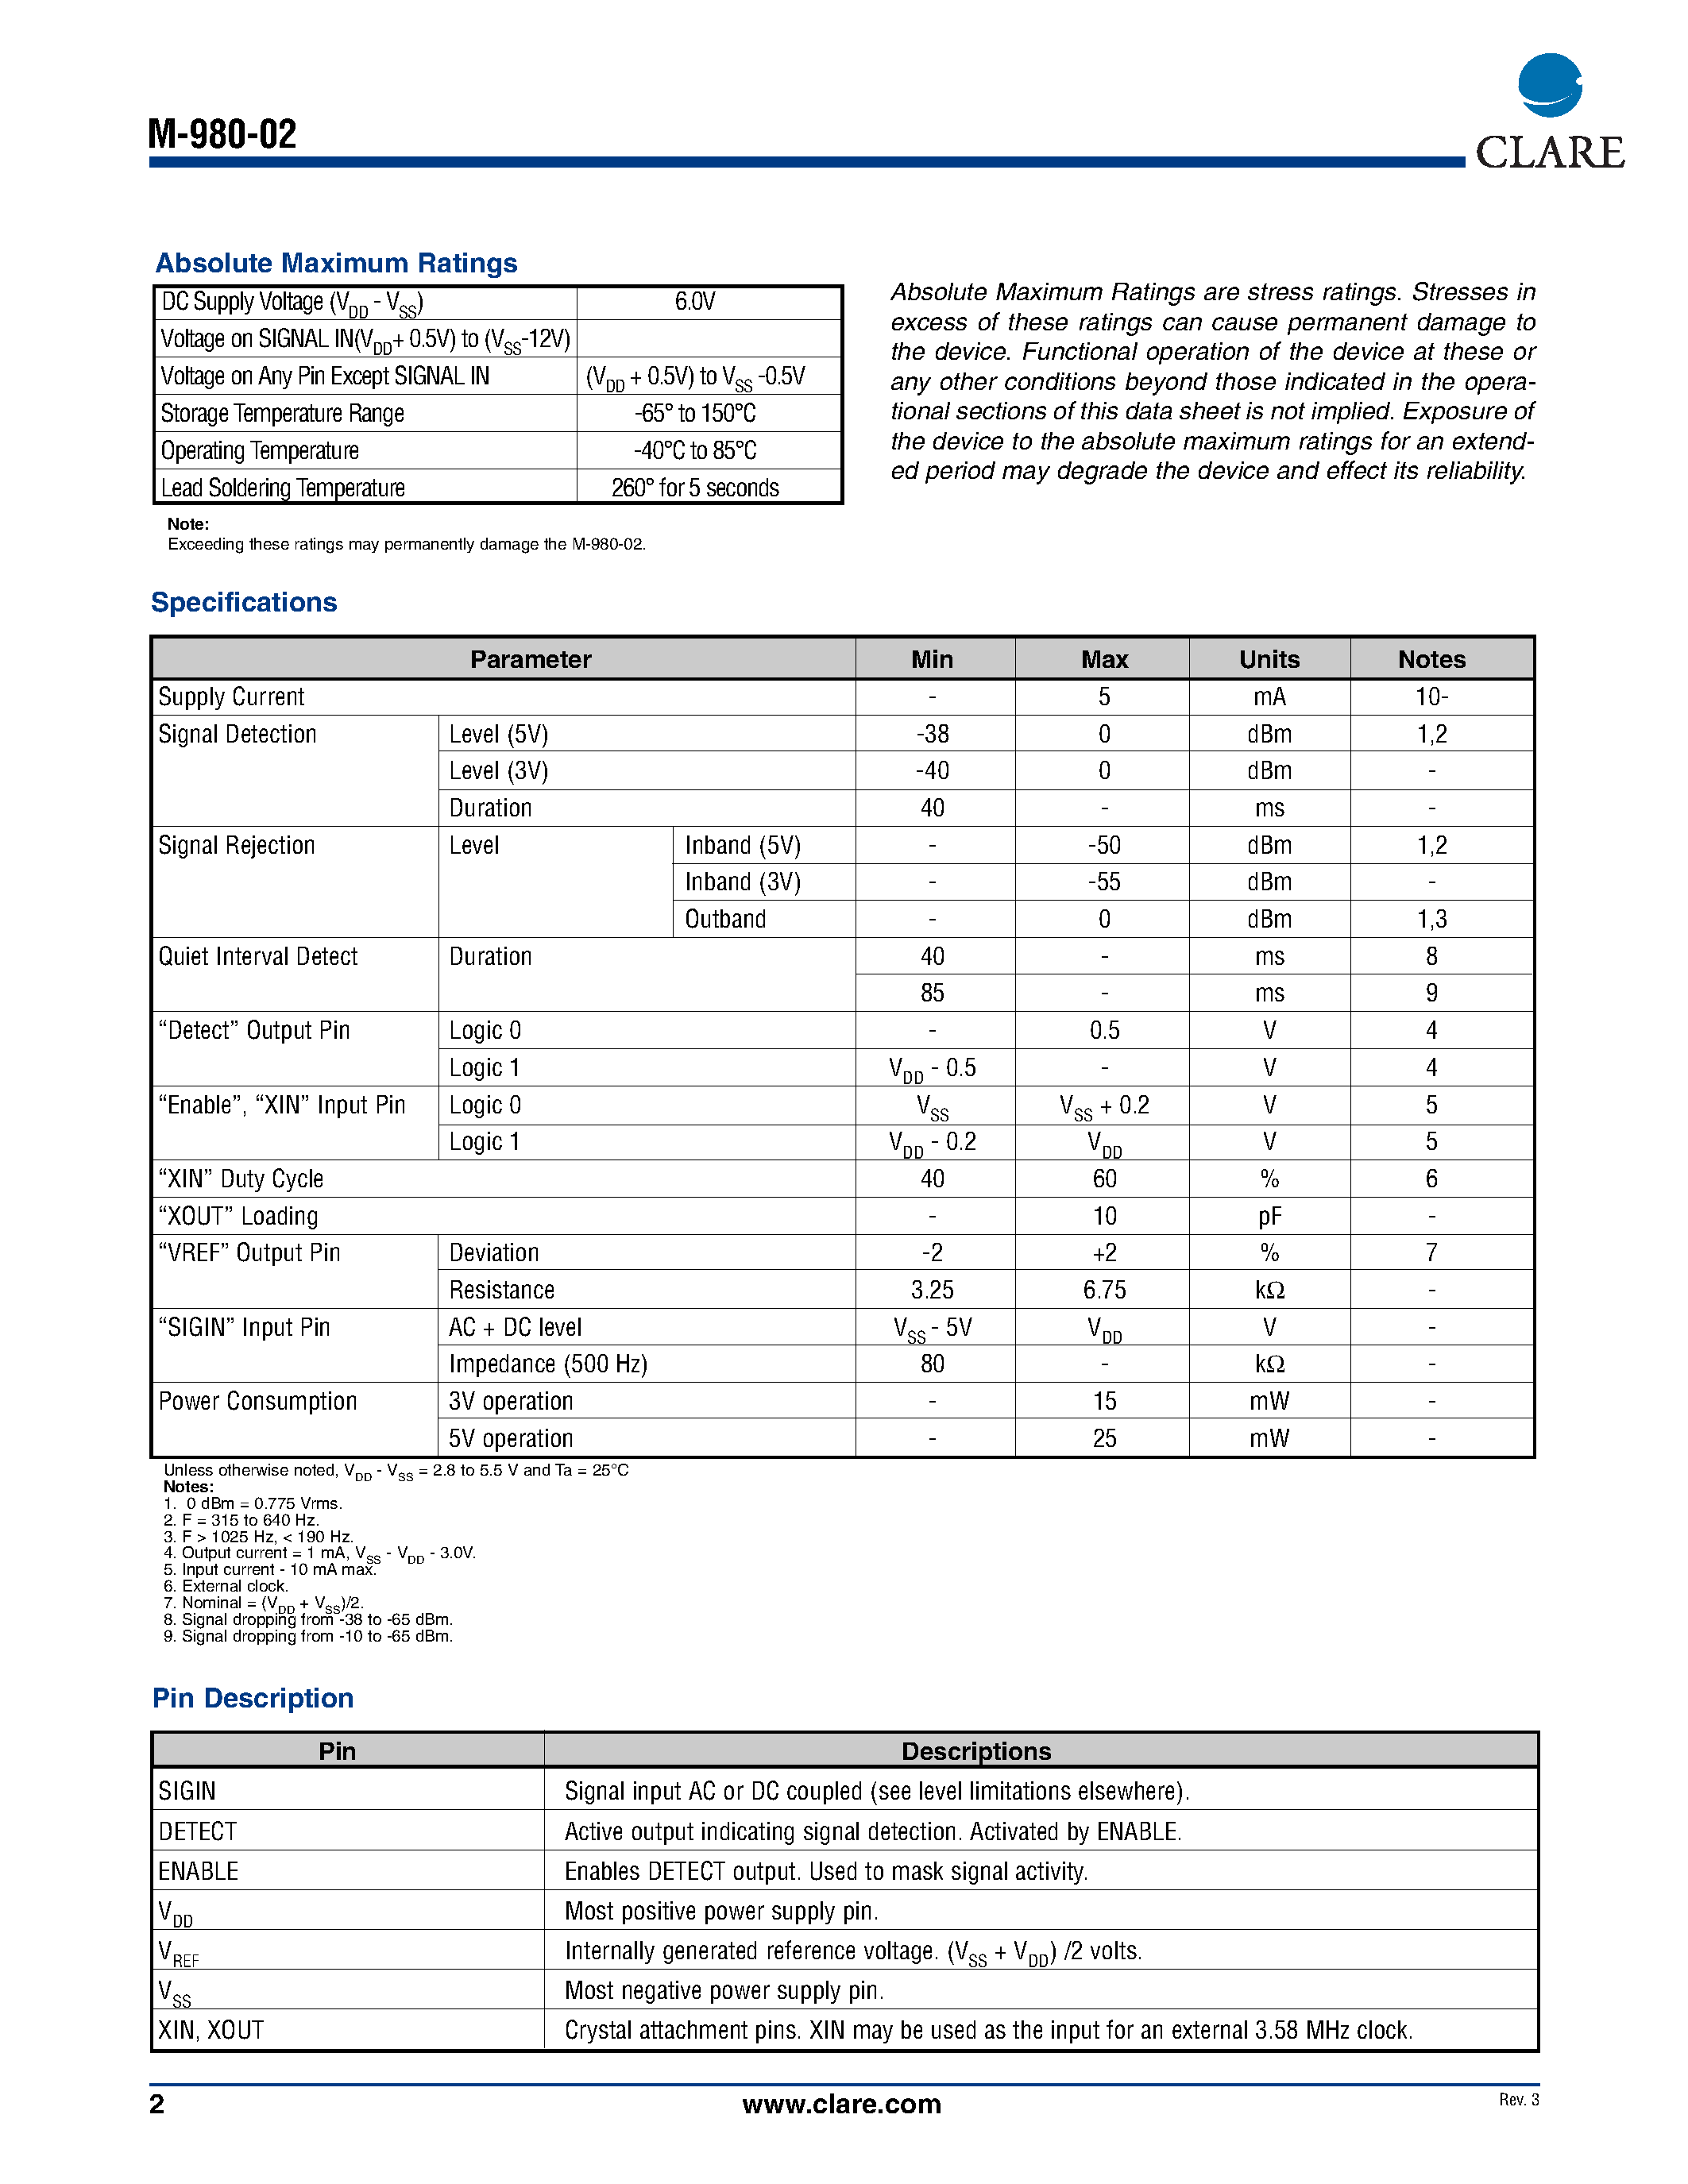 Datasheet M-980-02 - 3V/5V General Purpose Call Progress Tone Detector page 2